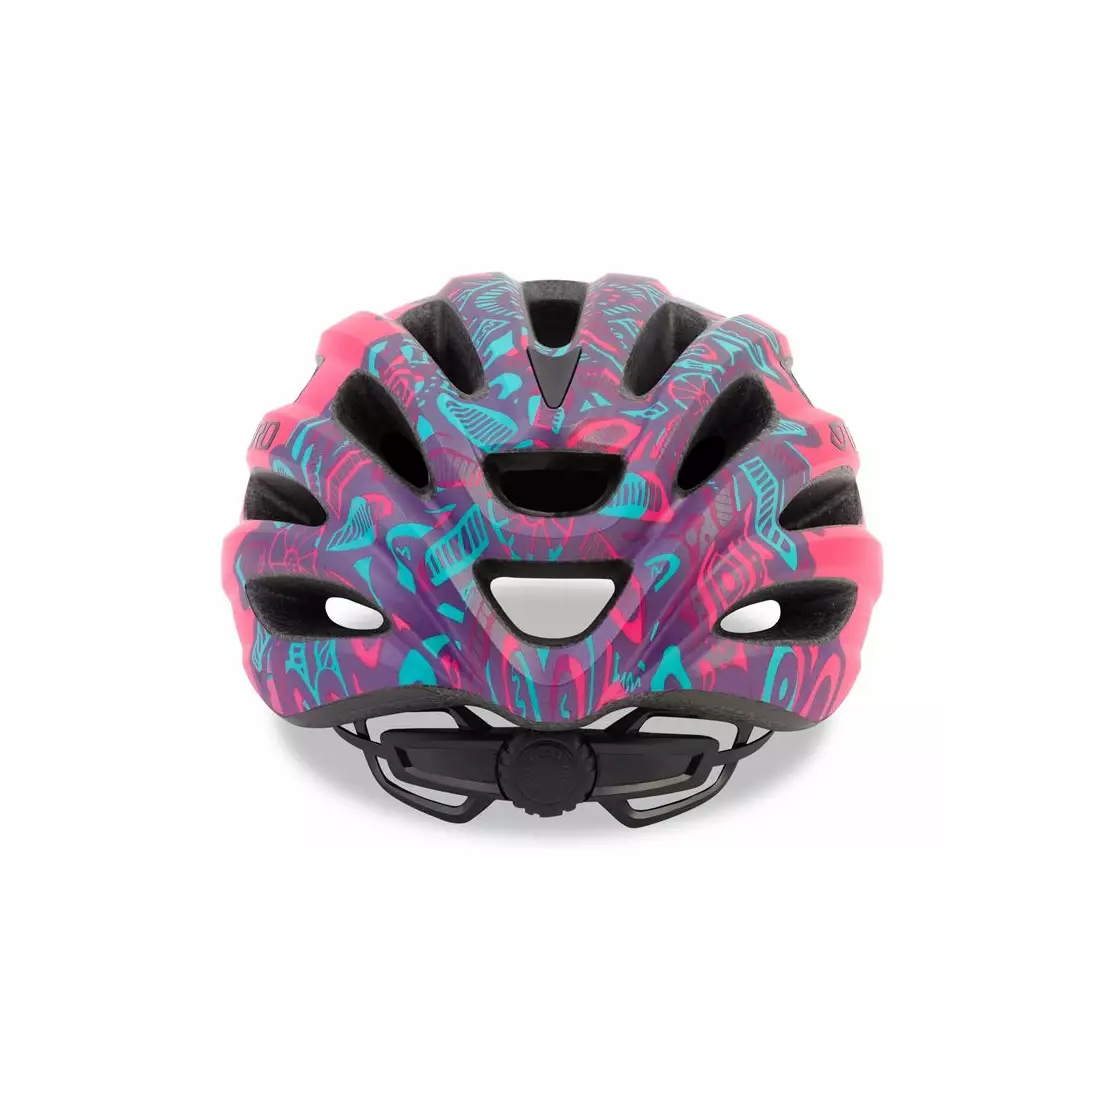 GIRO GR-7089359 Kid's helmet HALE matte bright pink 